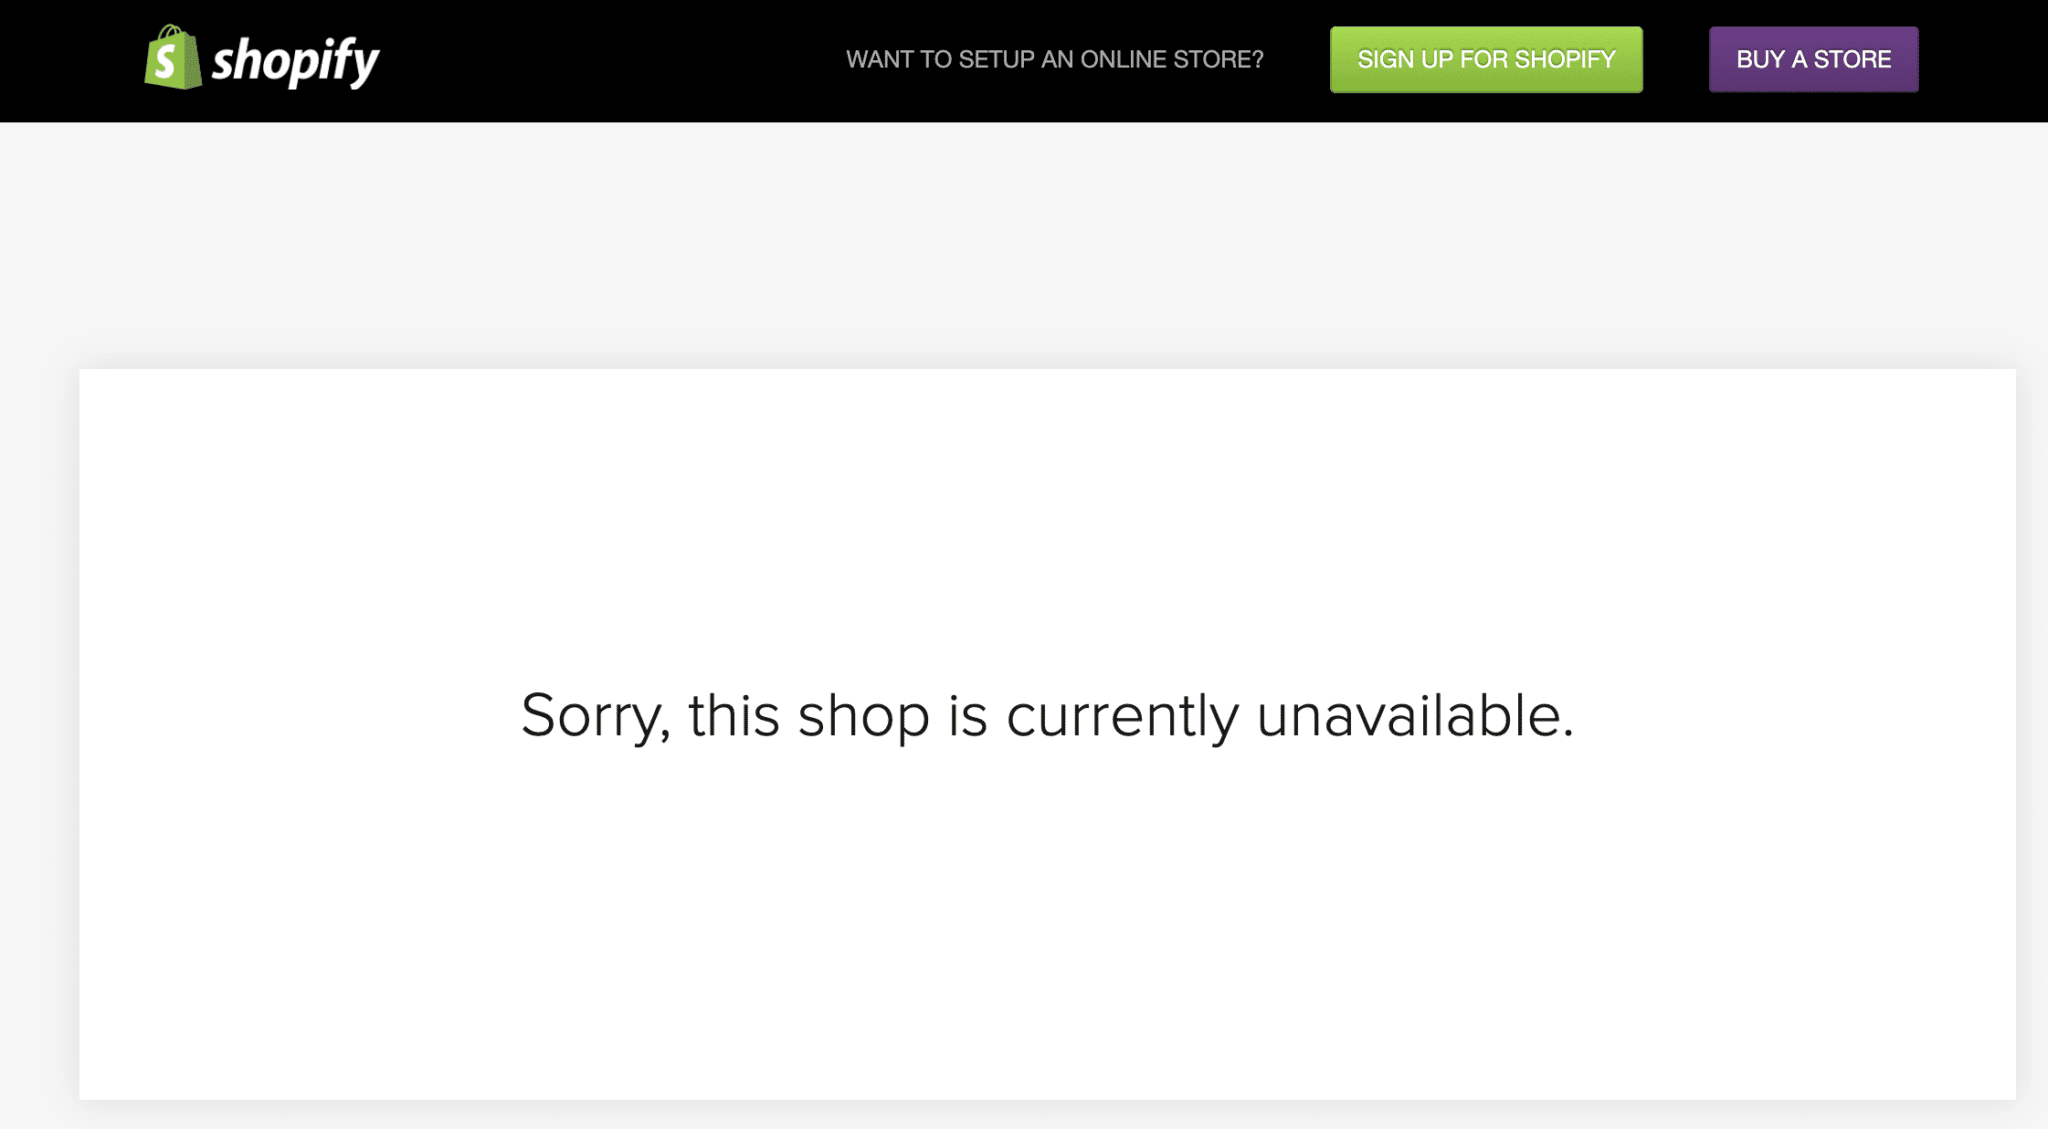 Scott Hilse's Shopify store closed down